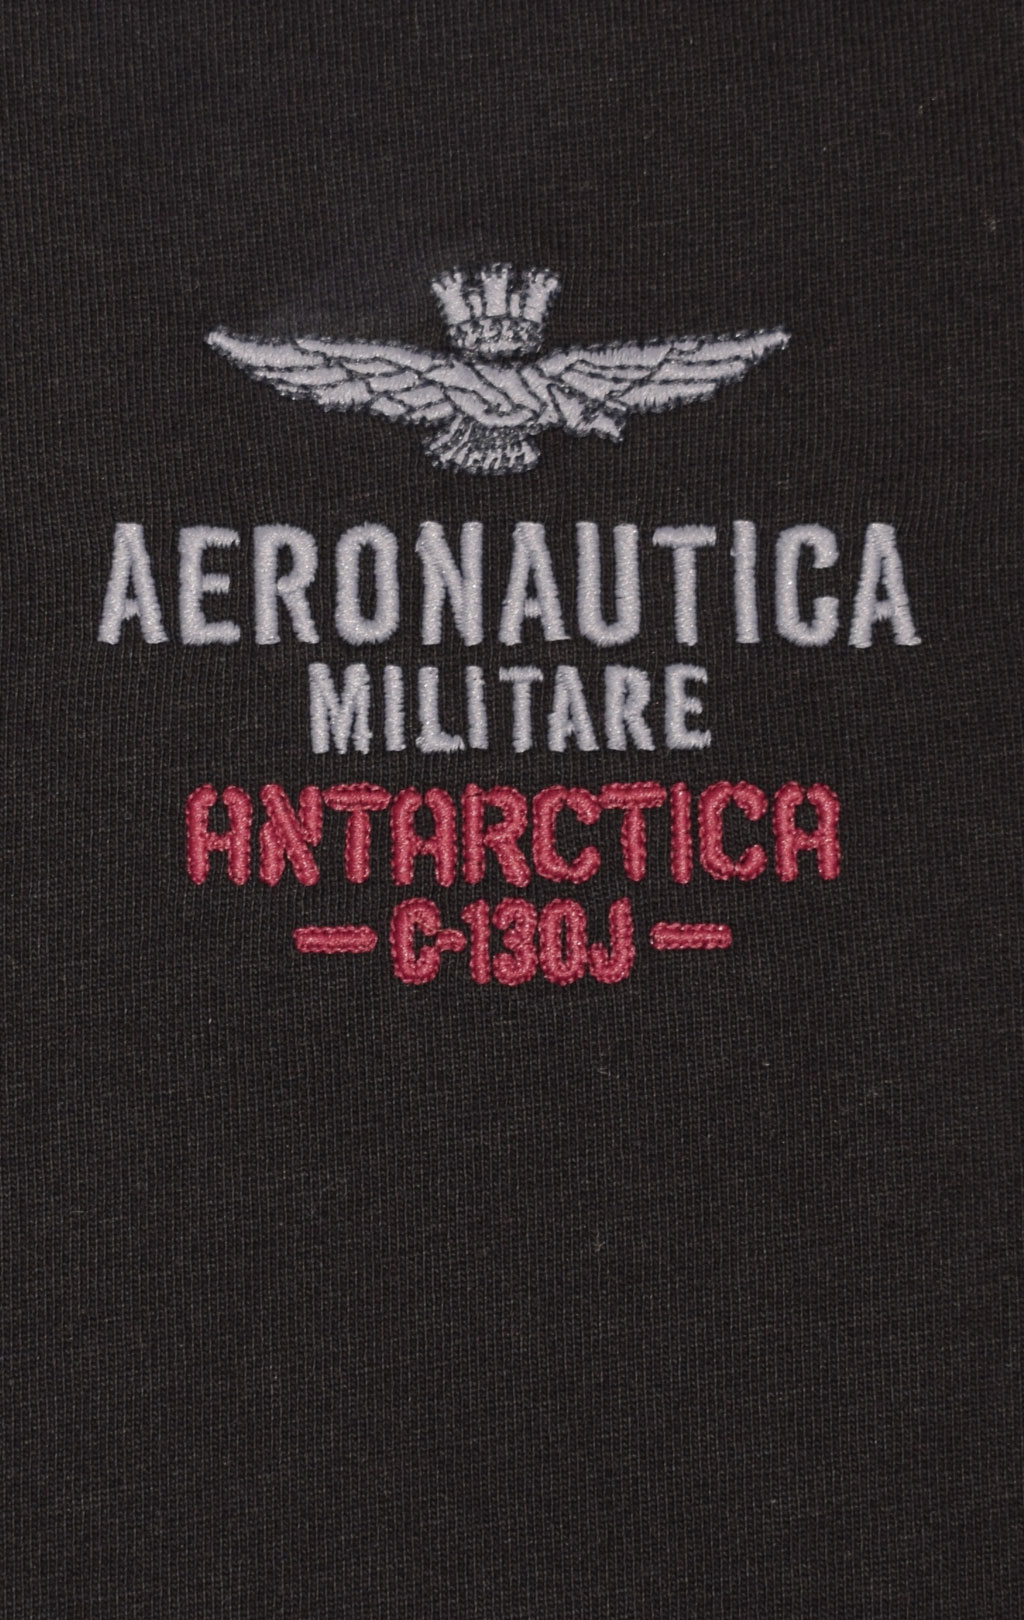 Лонгслив AERONAUTICA MILITARE ANTARCTICA FW 23/24/TR jet black (TS 2157) 